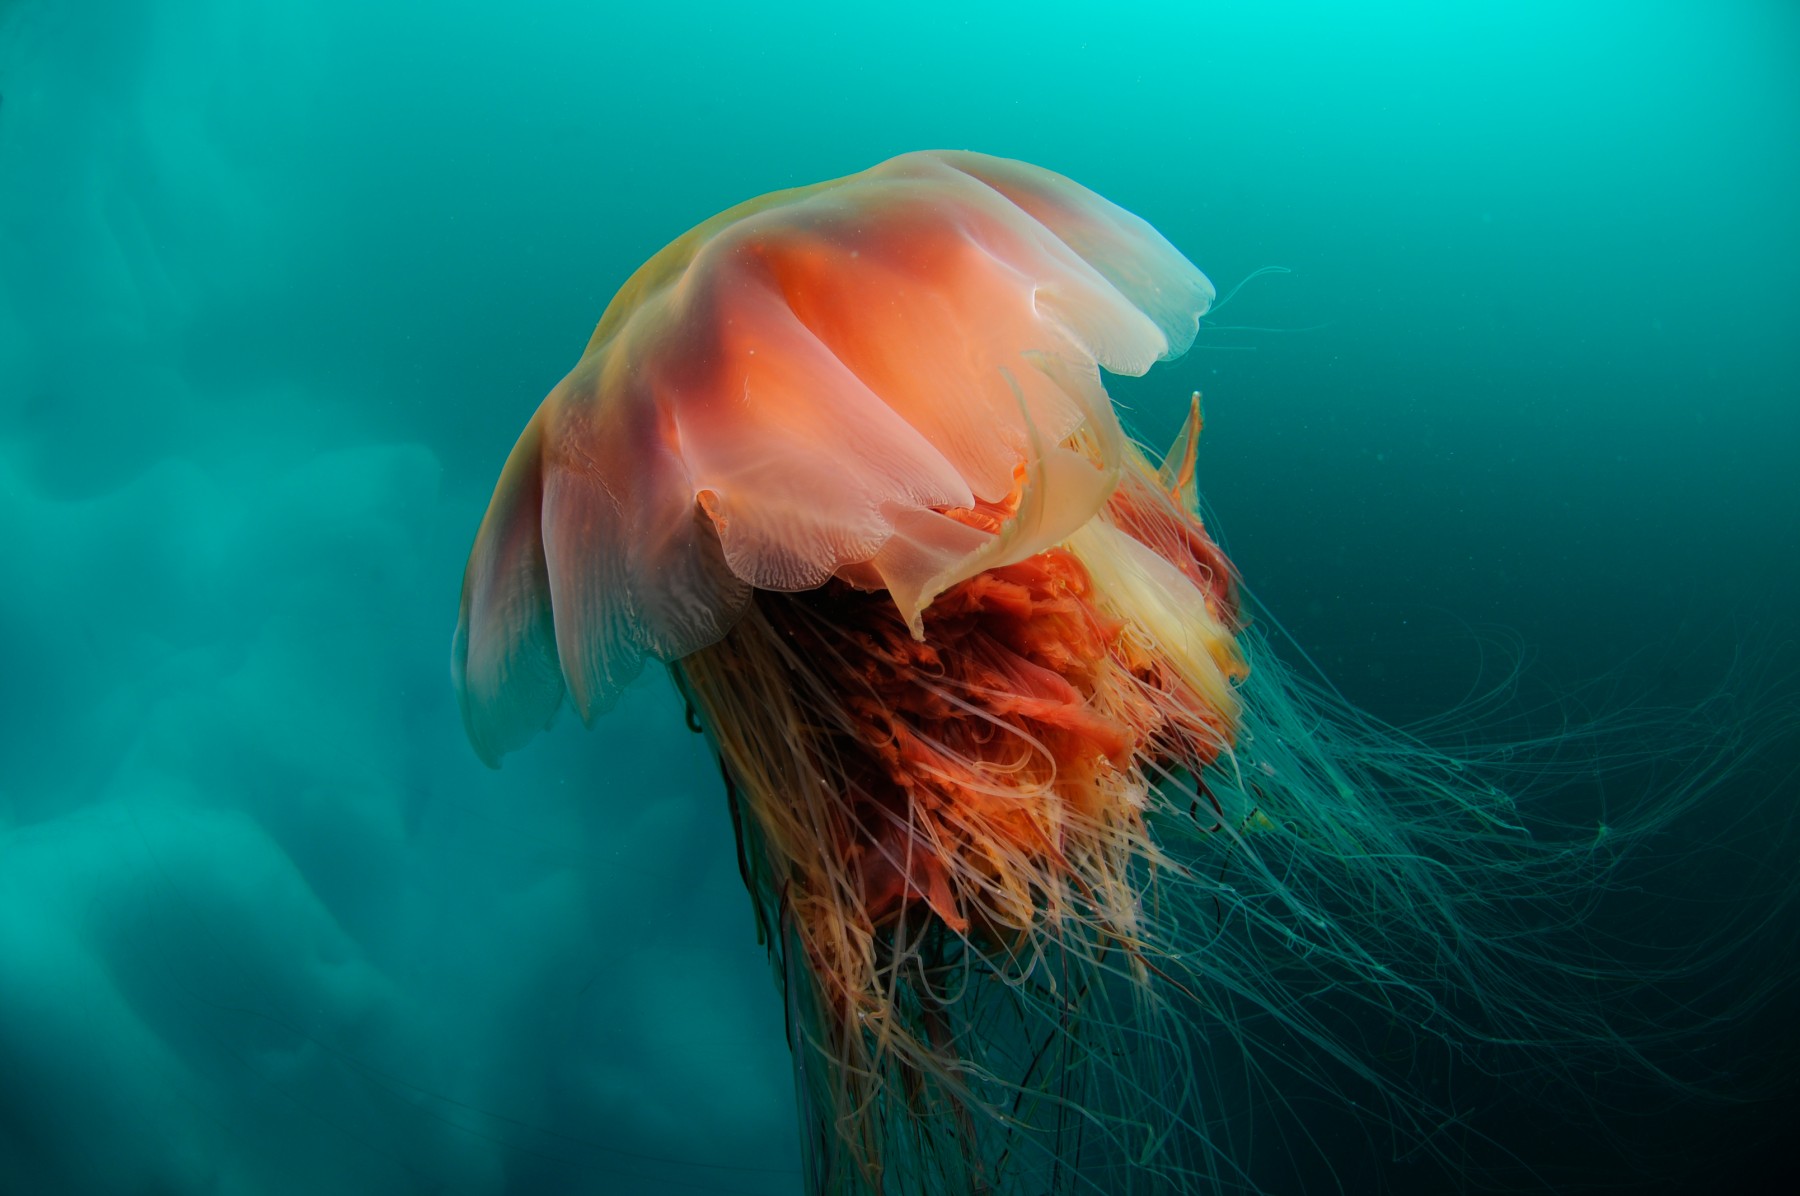 Jellyfish in Greenland